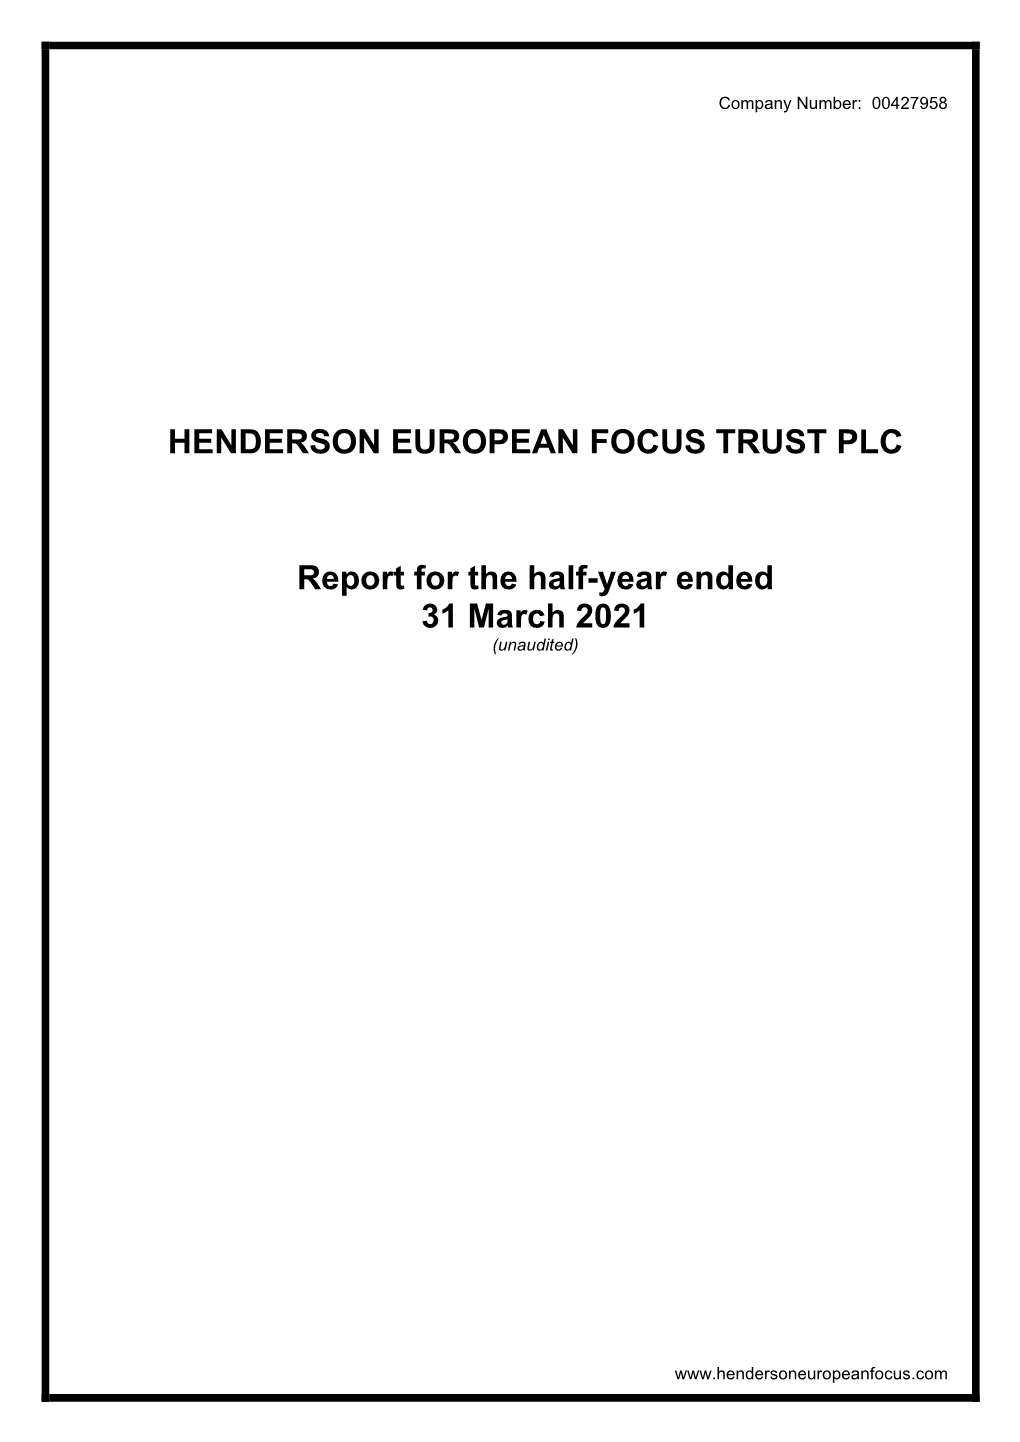 Henderson European Focus Trust Plc